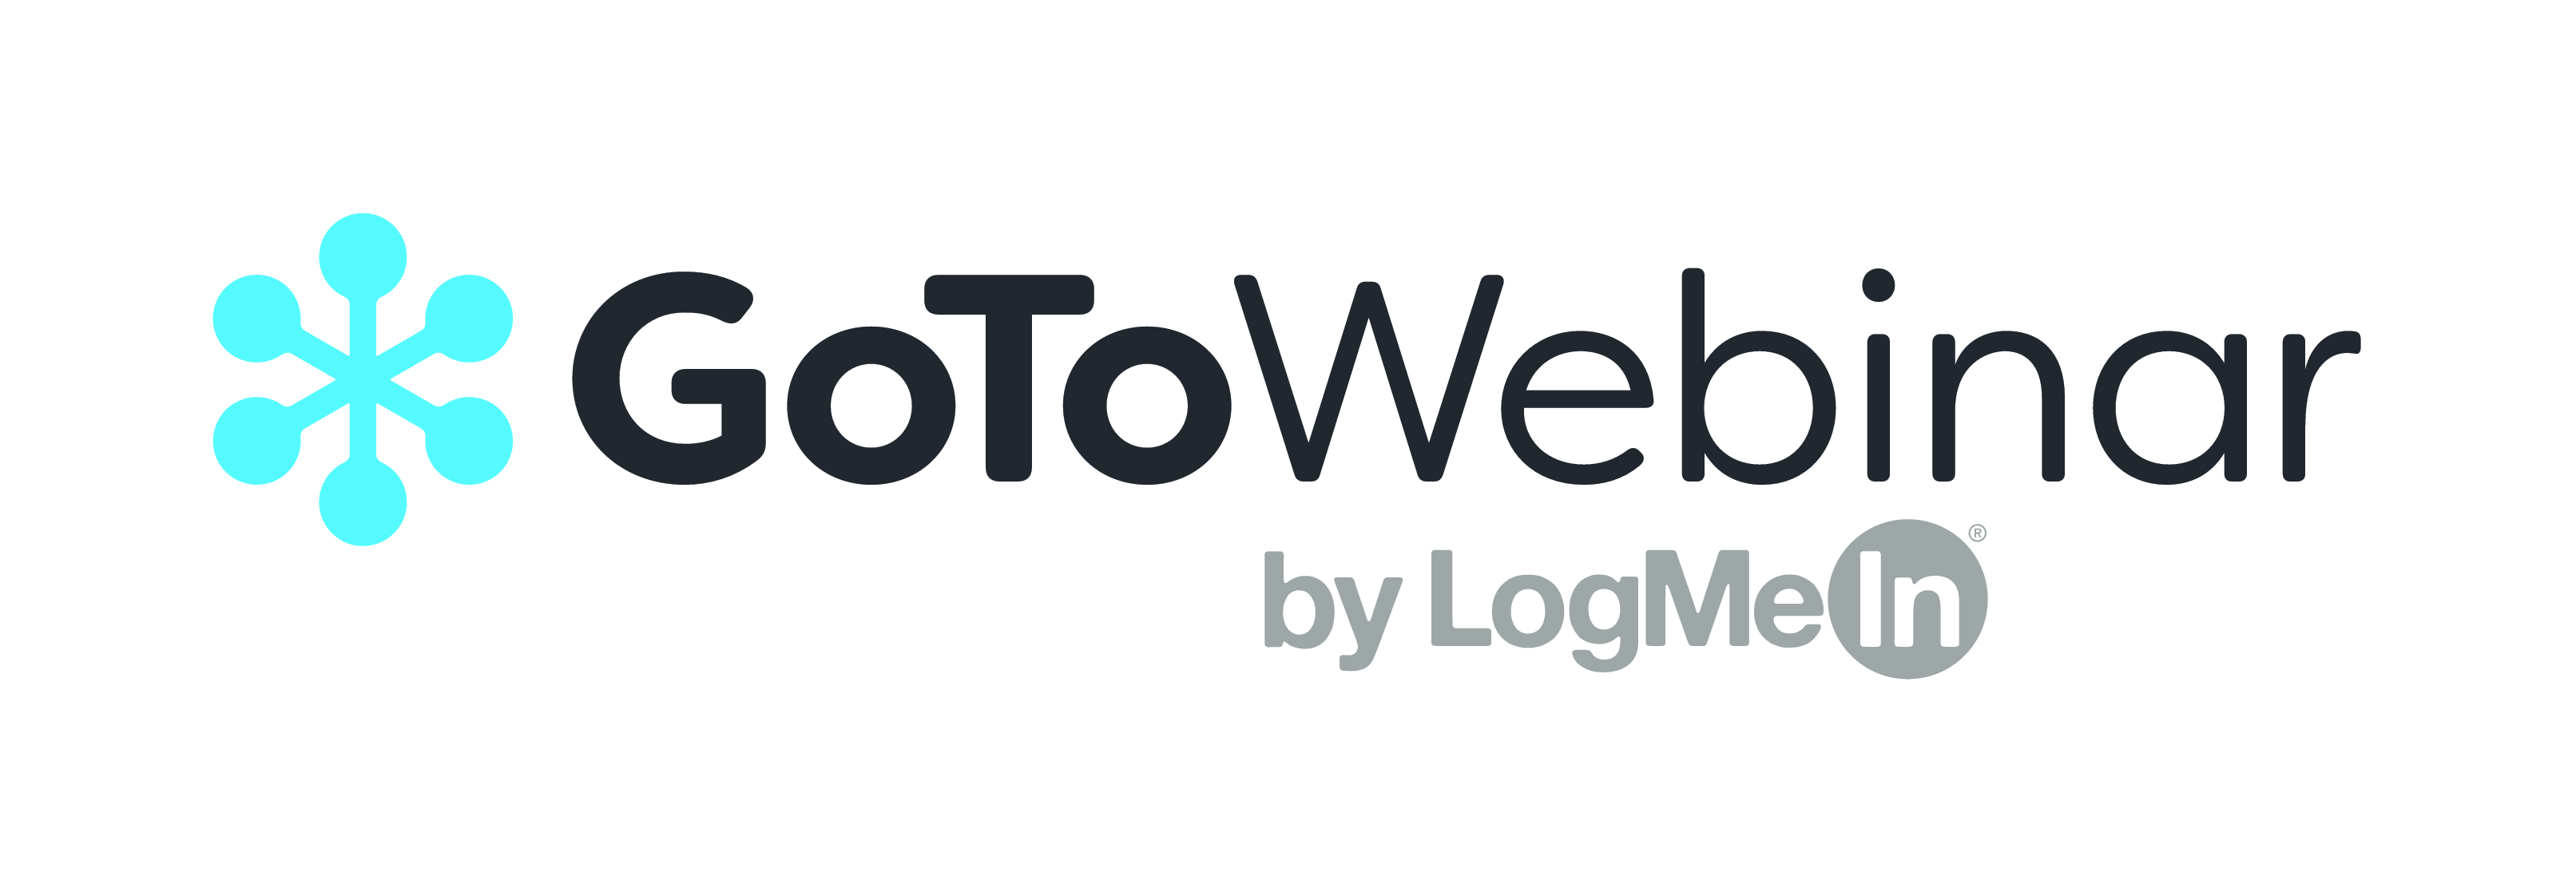 LogMeIn  - GoToWebinar